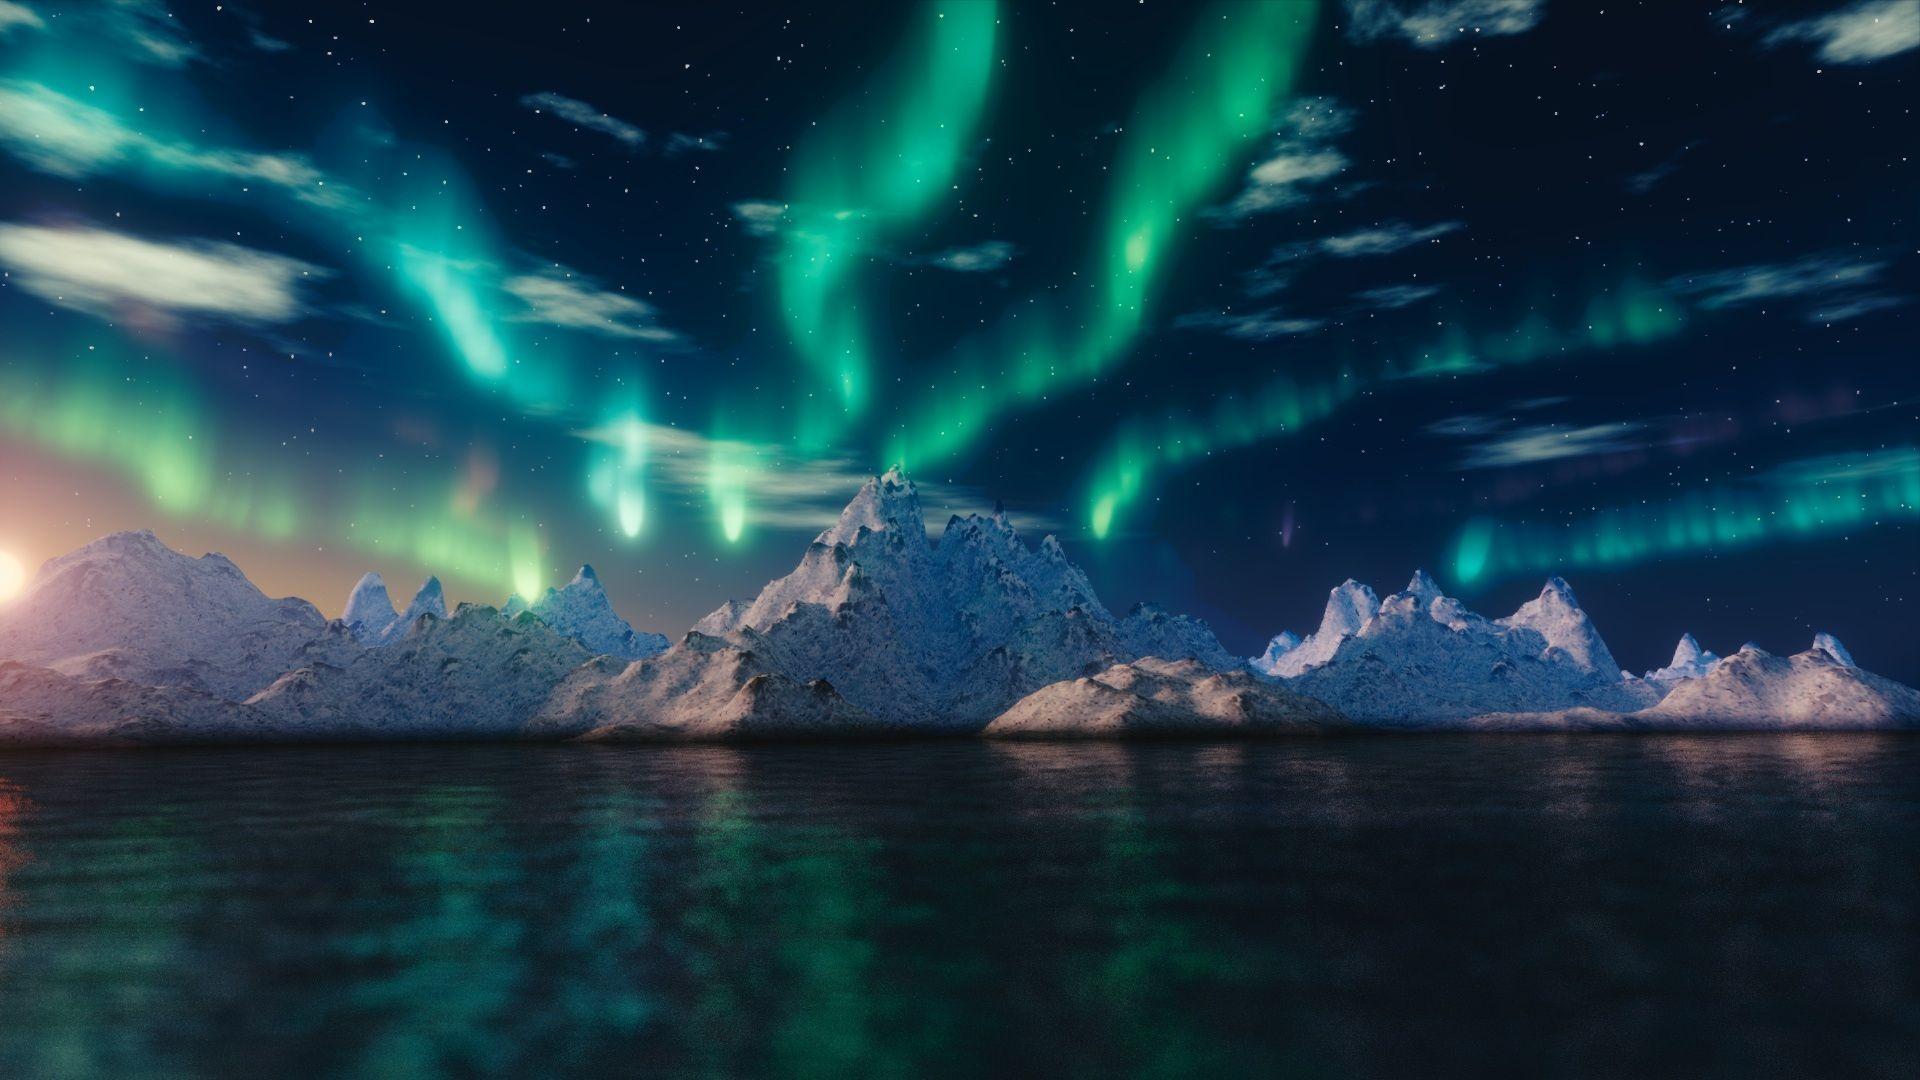 Free Image, nature, snow, atmosphere, color, aurora borealis